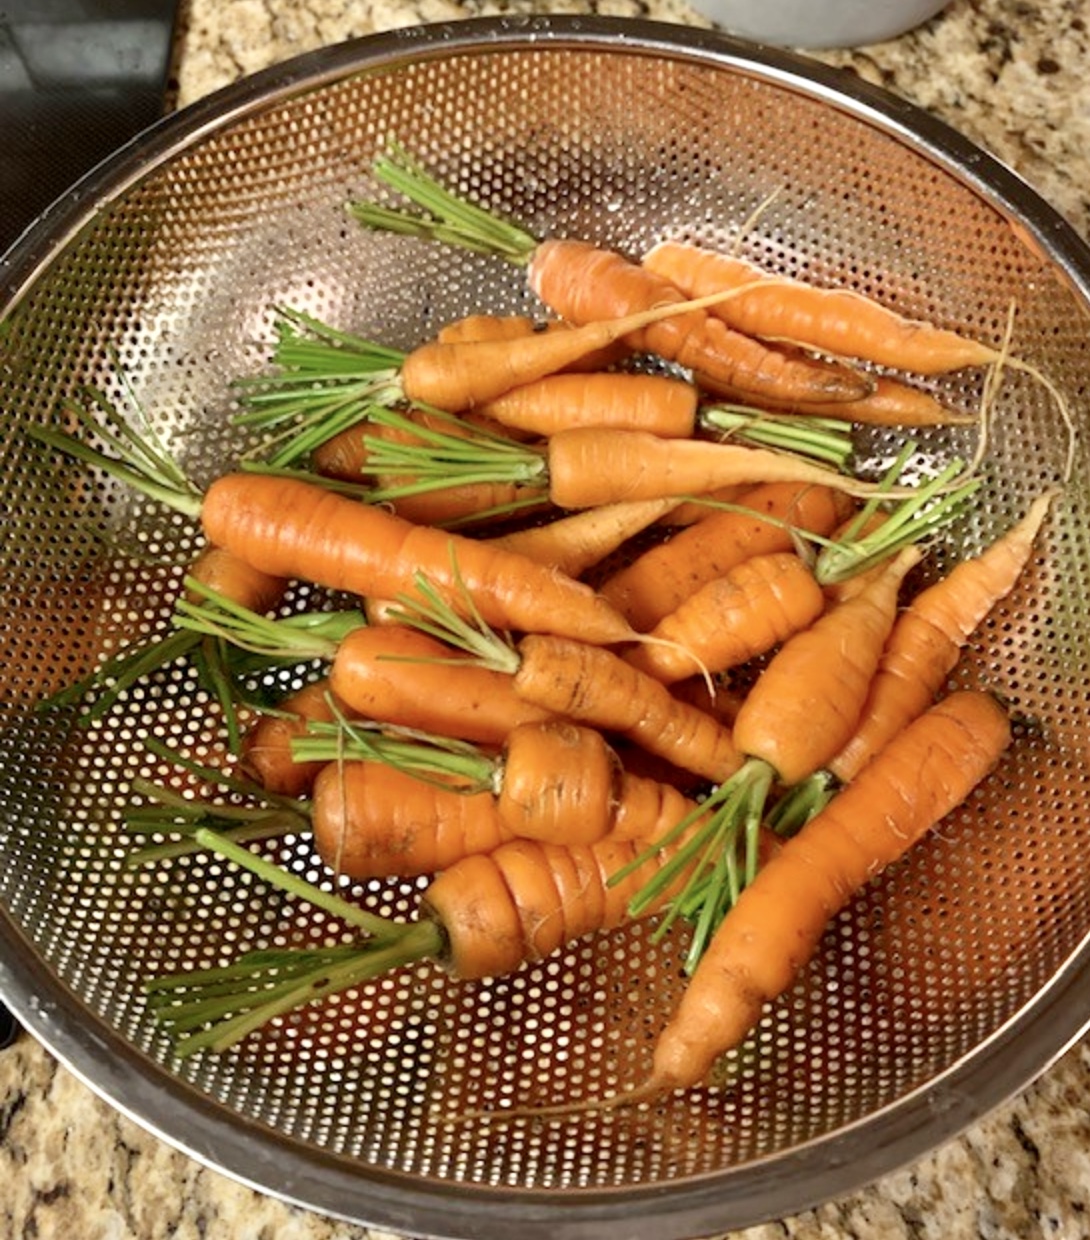 a colandar full of carrots 